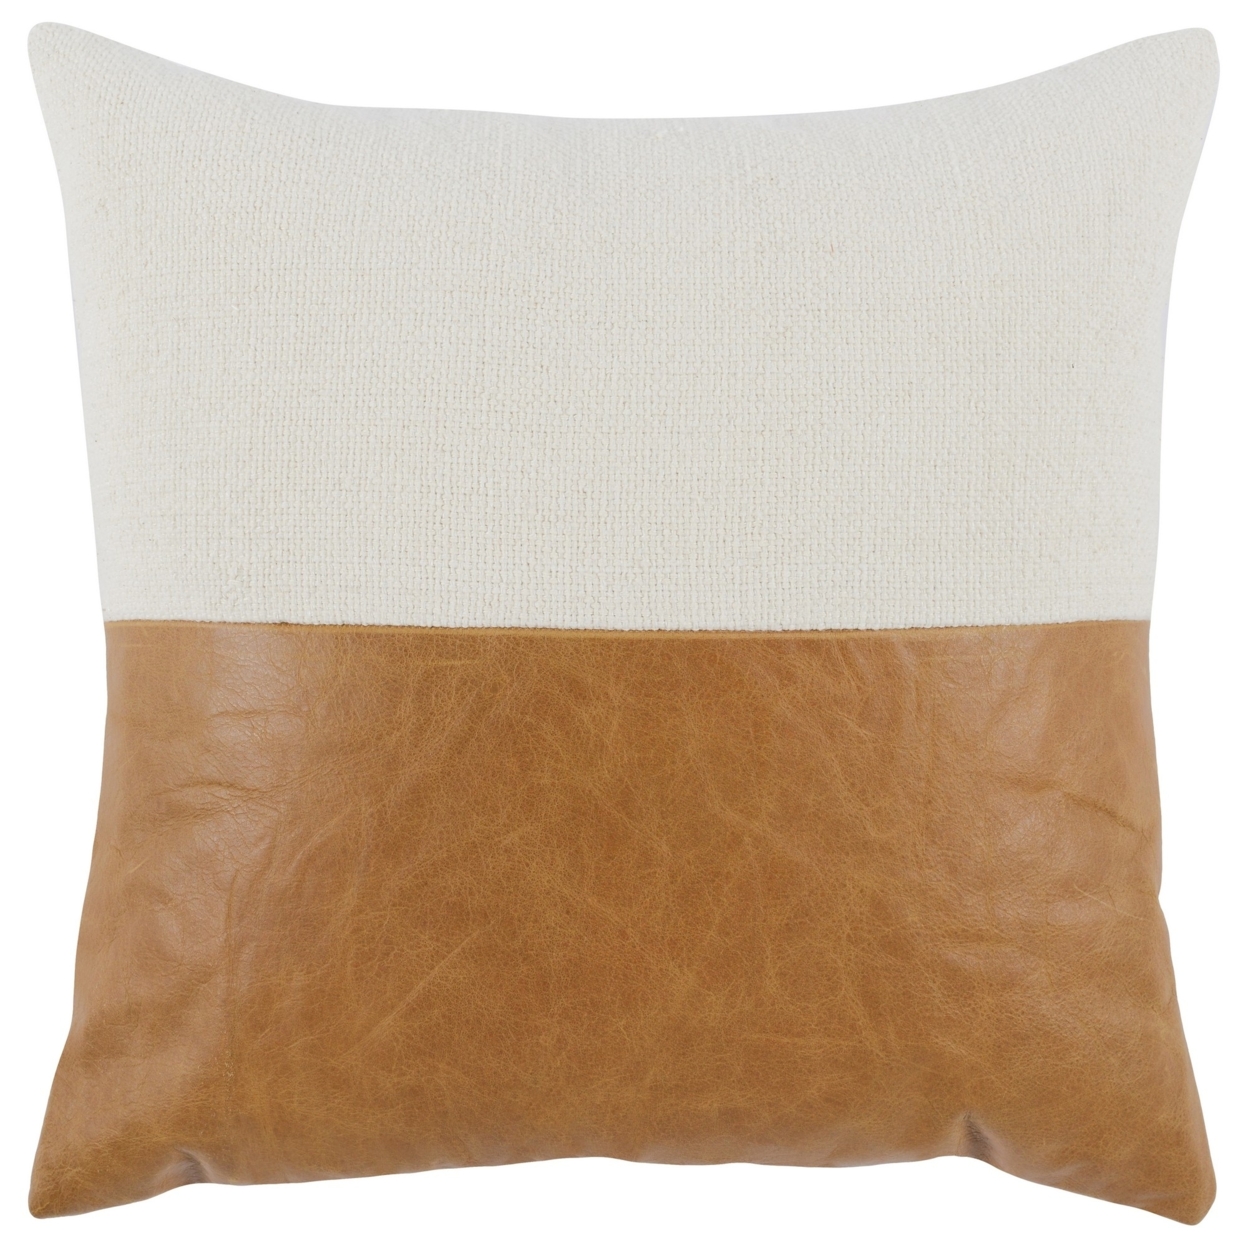 20 X 20 Throw Pillow, Genuine Leather Cover, Dual Tone, Brown And White, Saltoro Sherpi